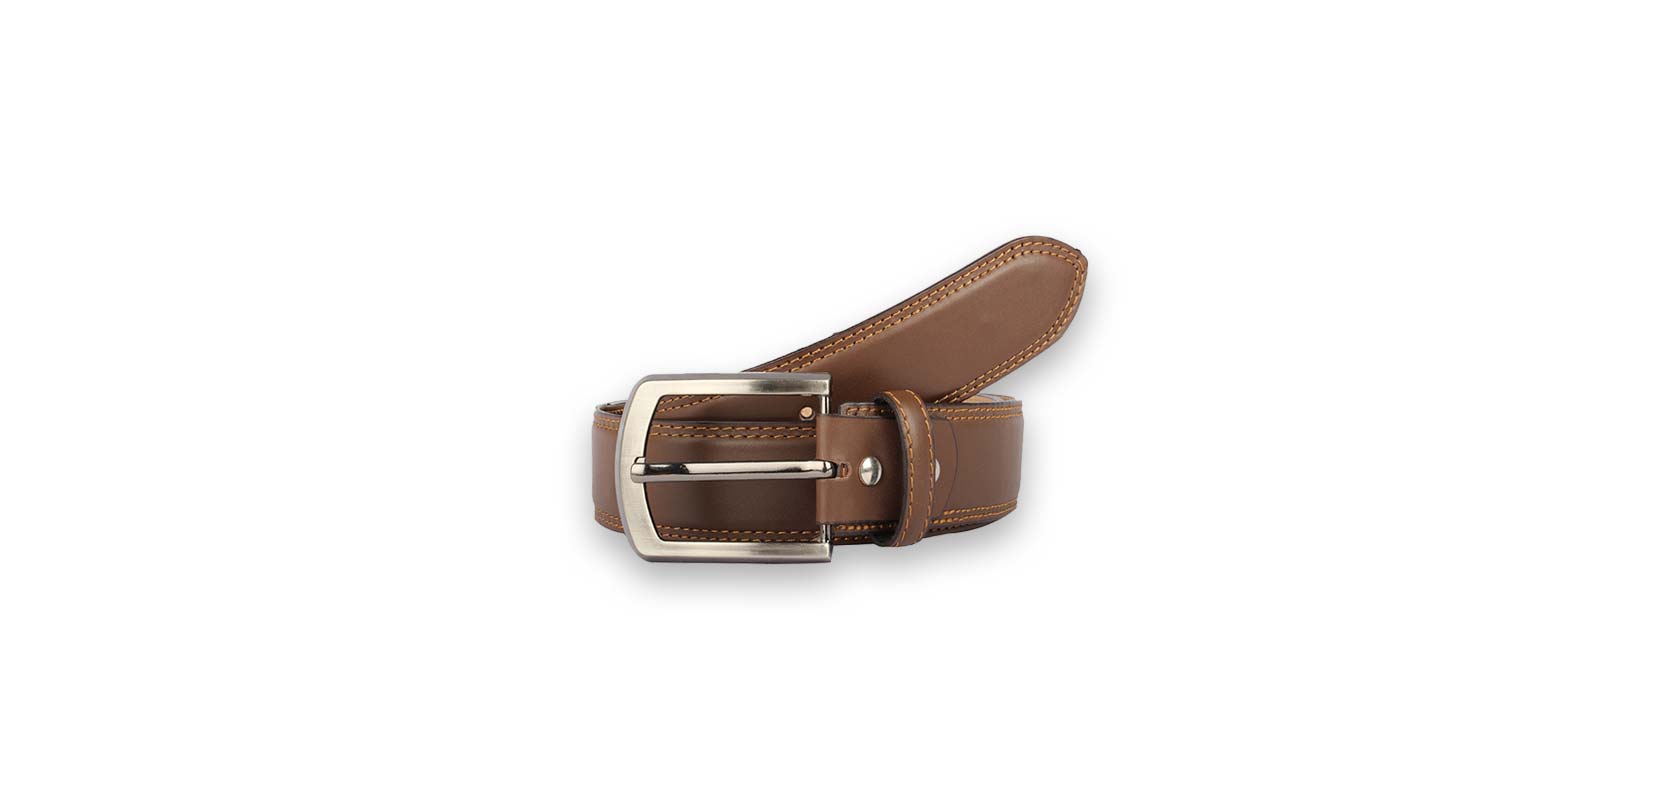  Spazio Leather belt